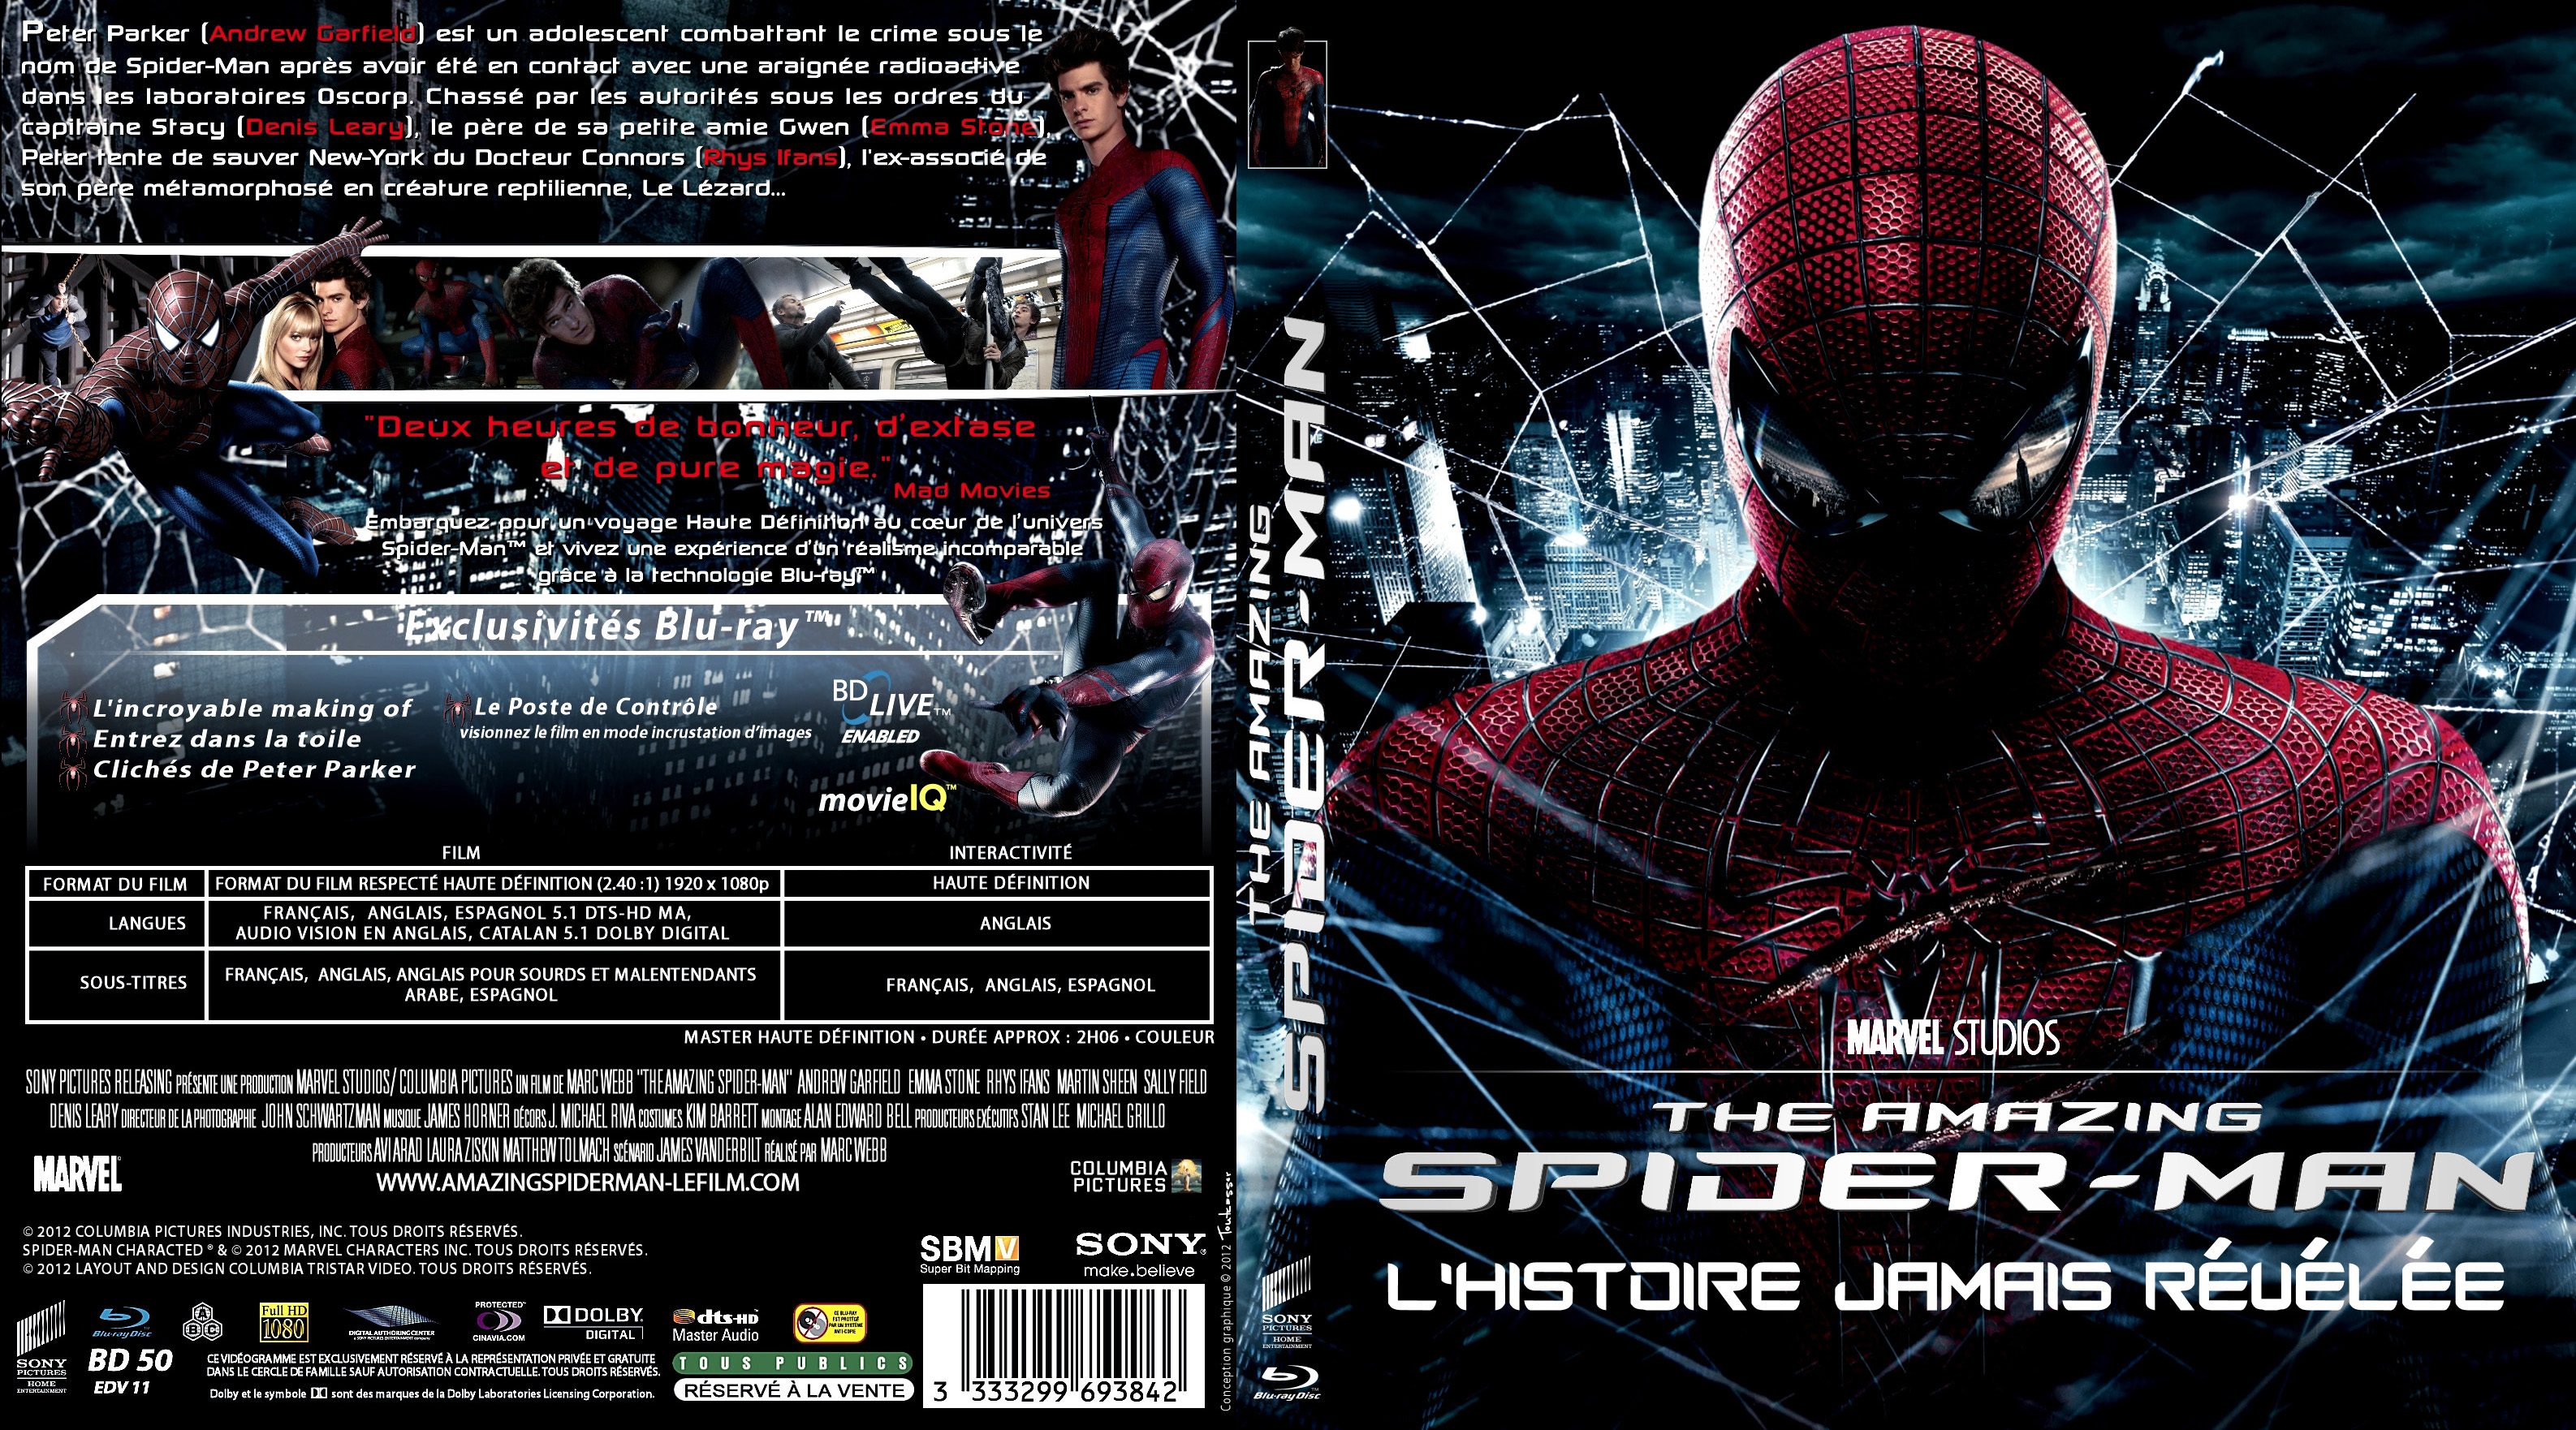 Jaquette DVD The amazing spiderman custom (BLU-RAY)